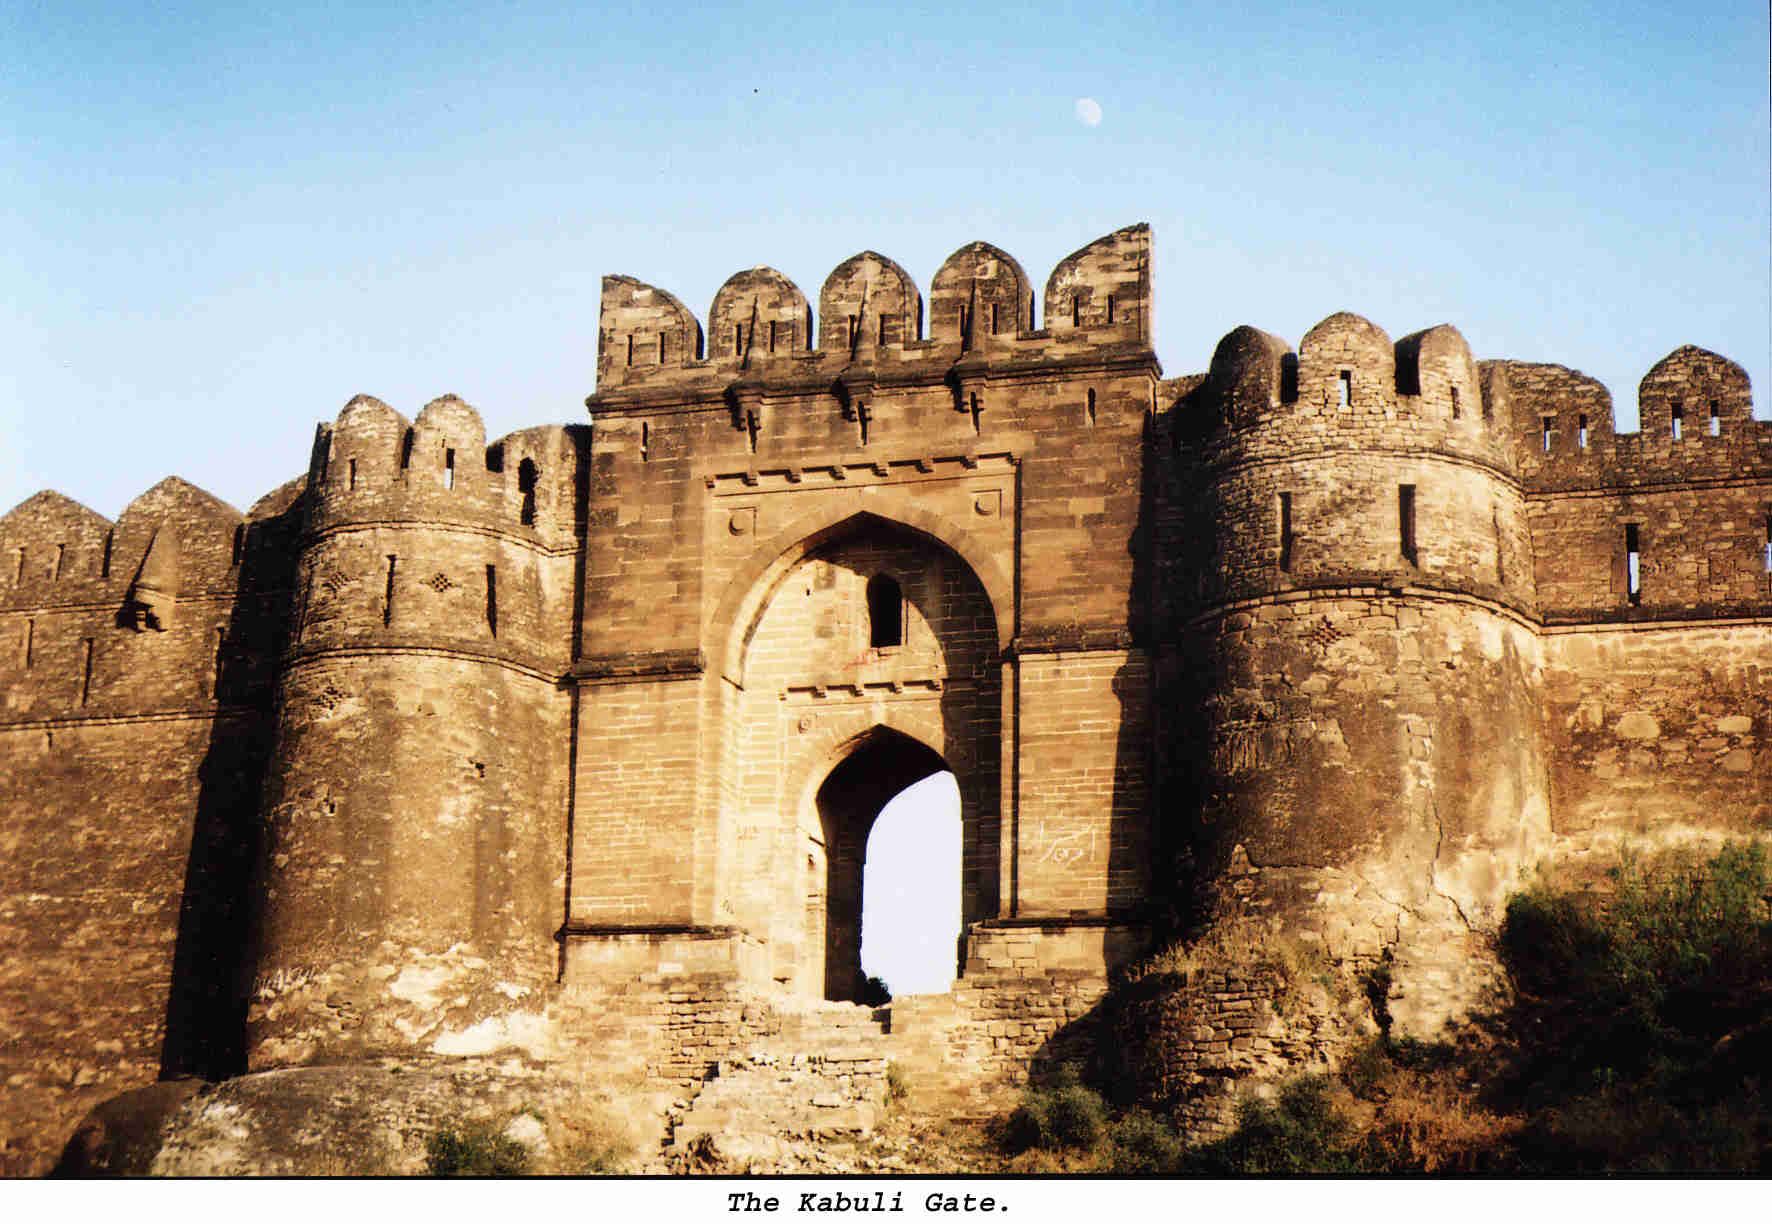 Rohtas Fort, Jhelum District, Pakistan: Architecture | Architecture ...